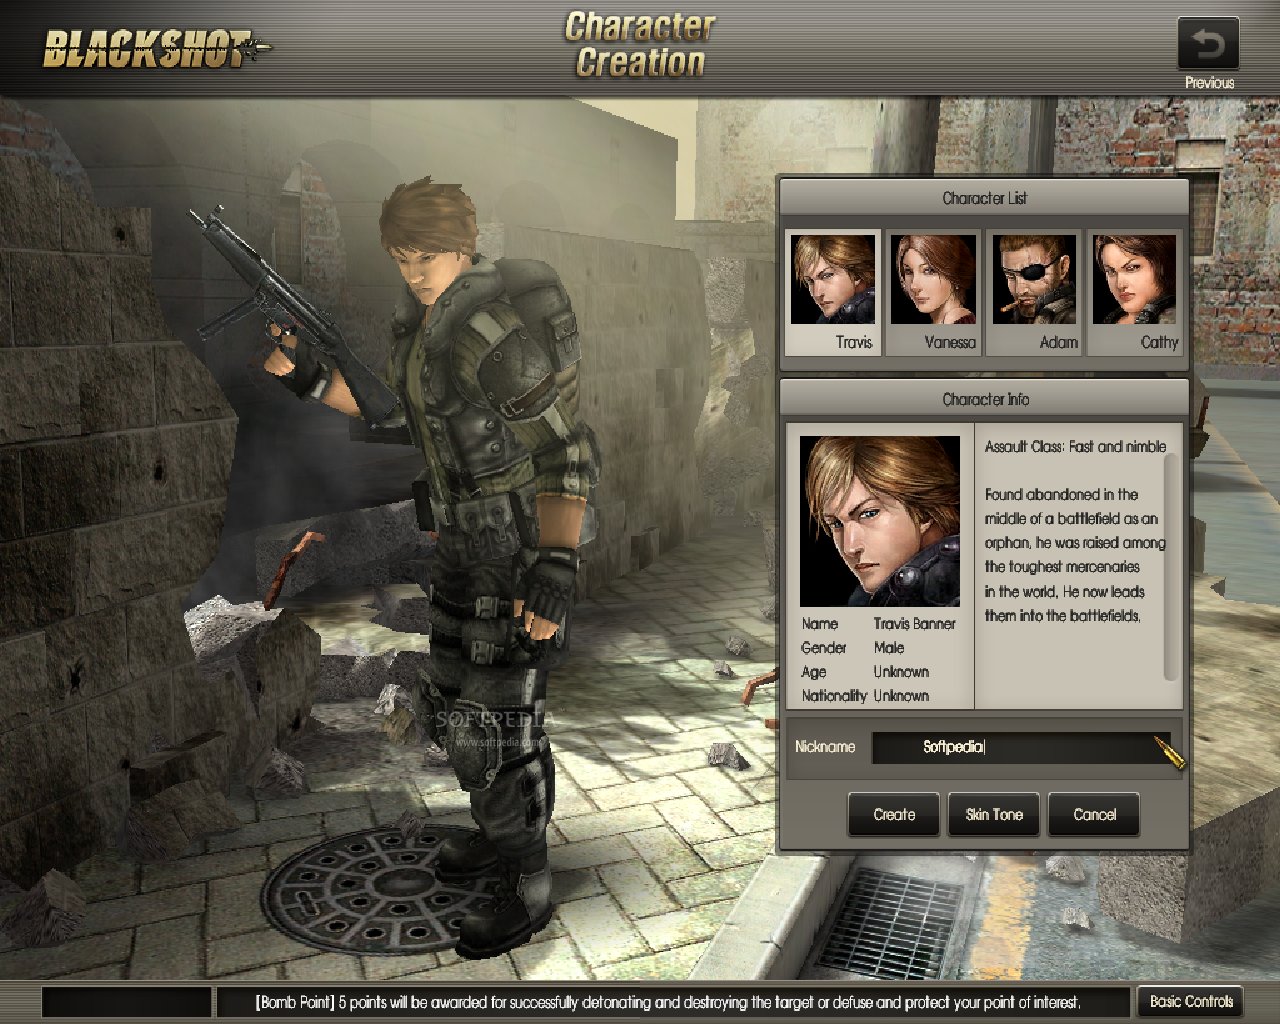 http://games.softpedia.com/screenshots/BlackShot-Online-Patch_1.jpg